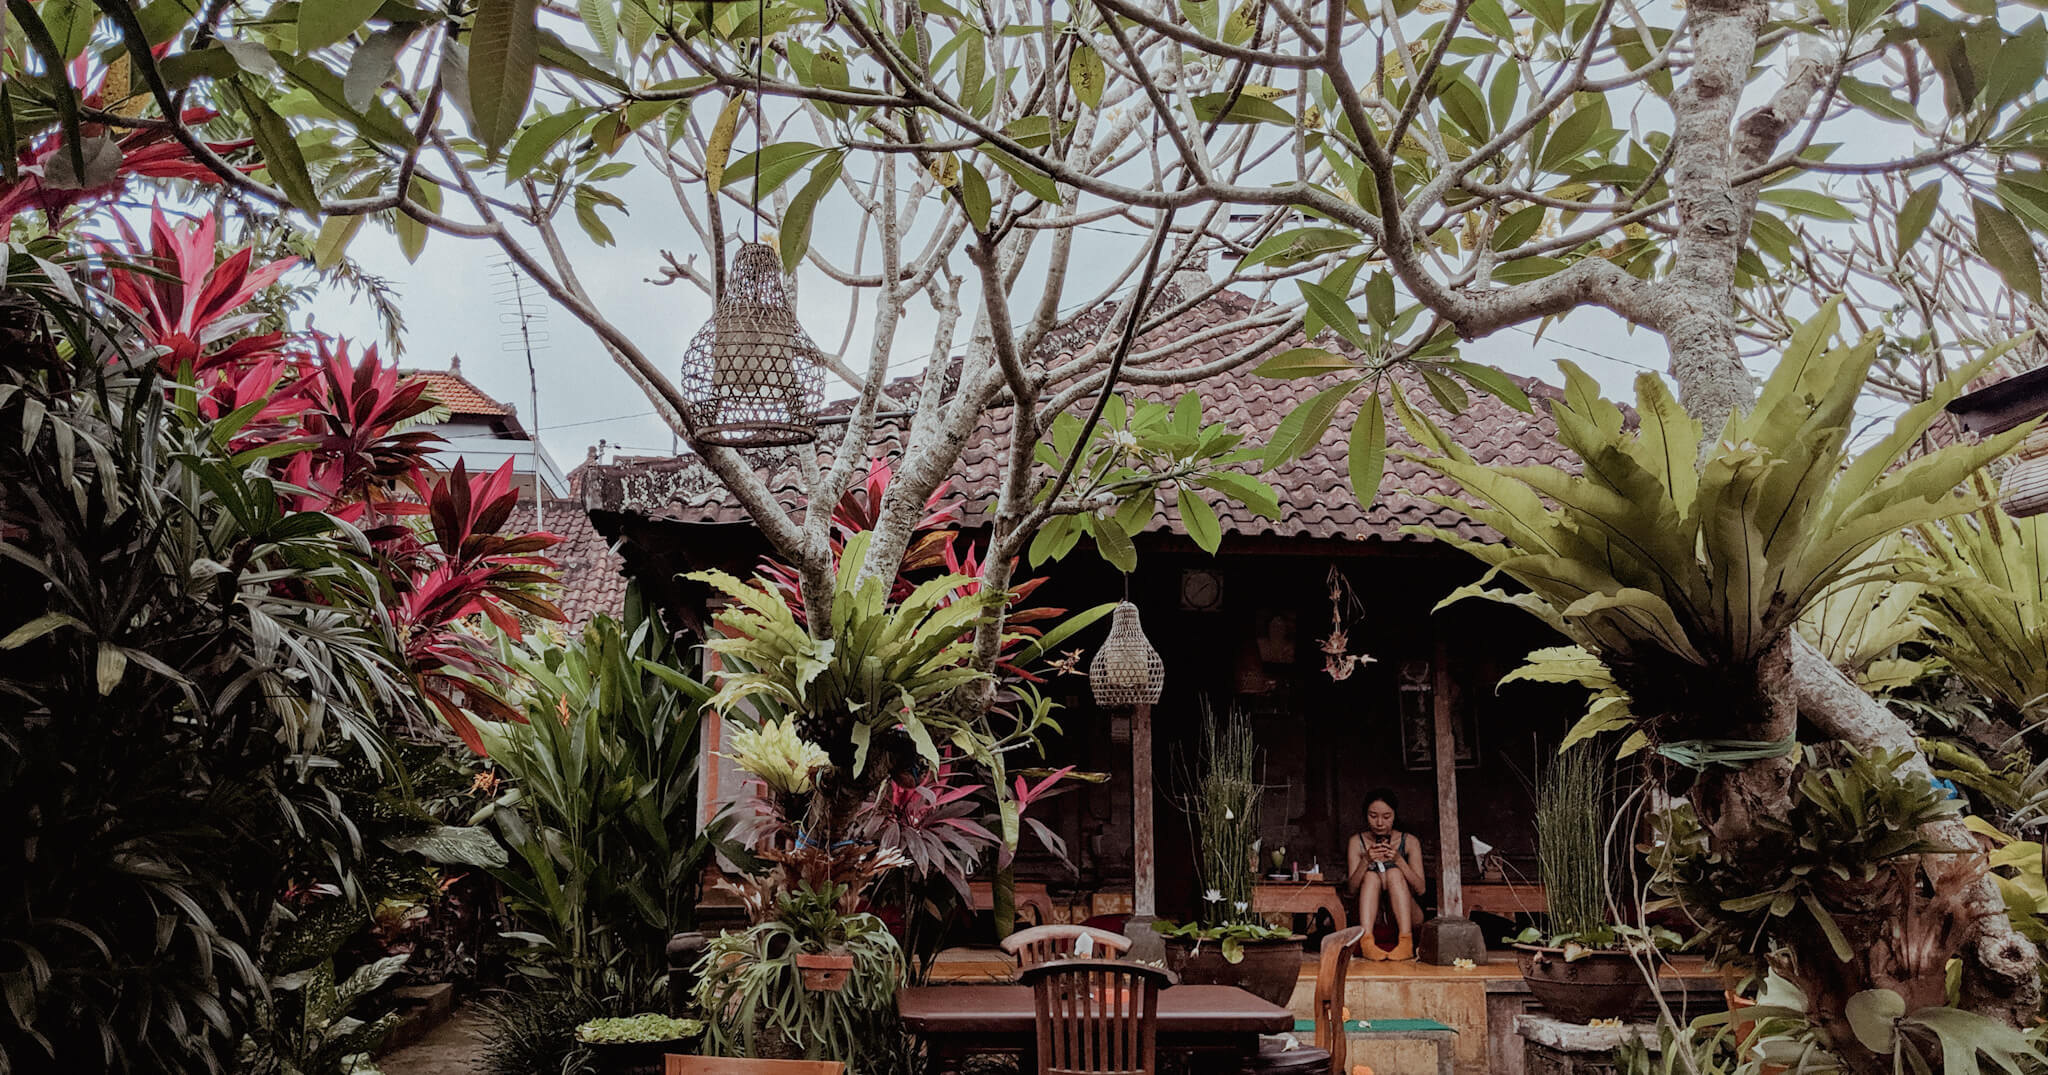 Bali itinerary mistakes to avoid